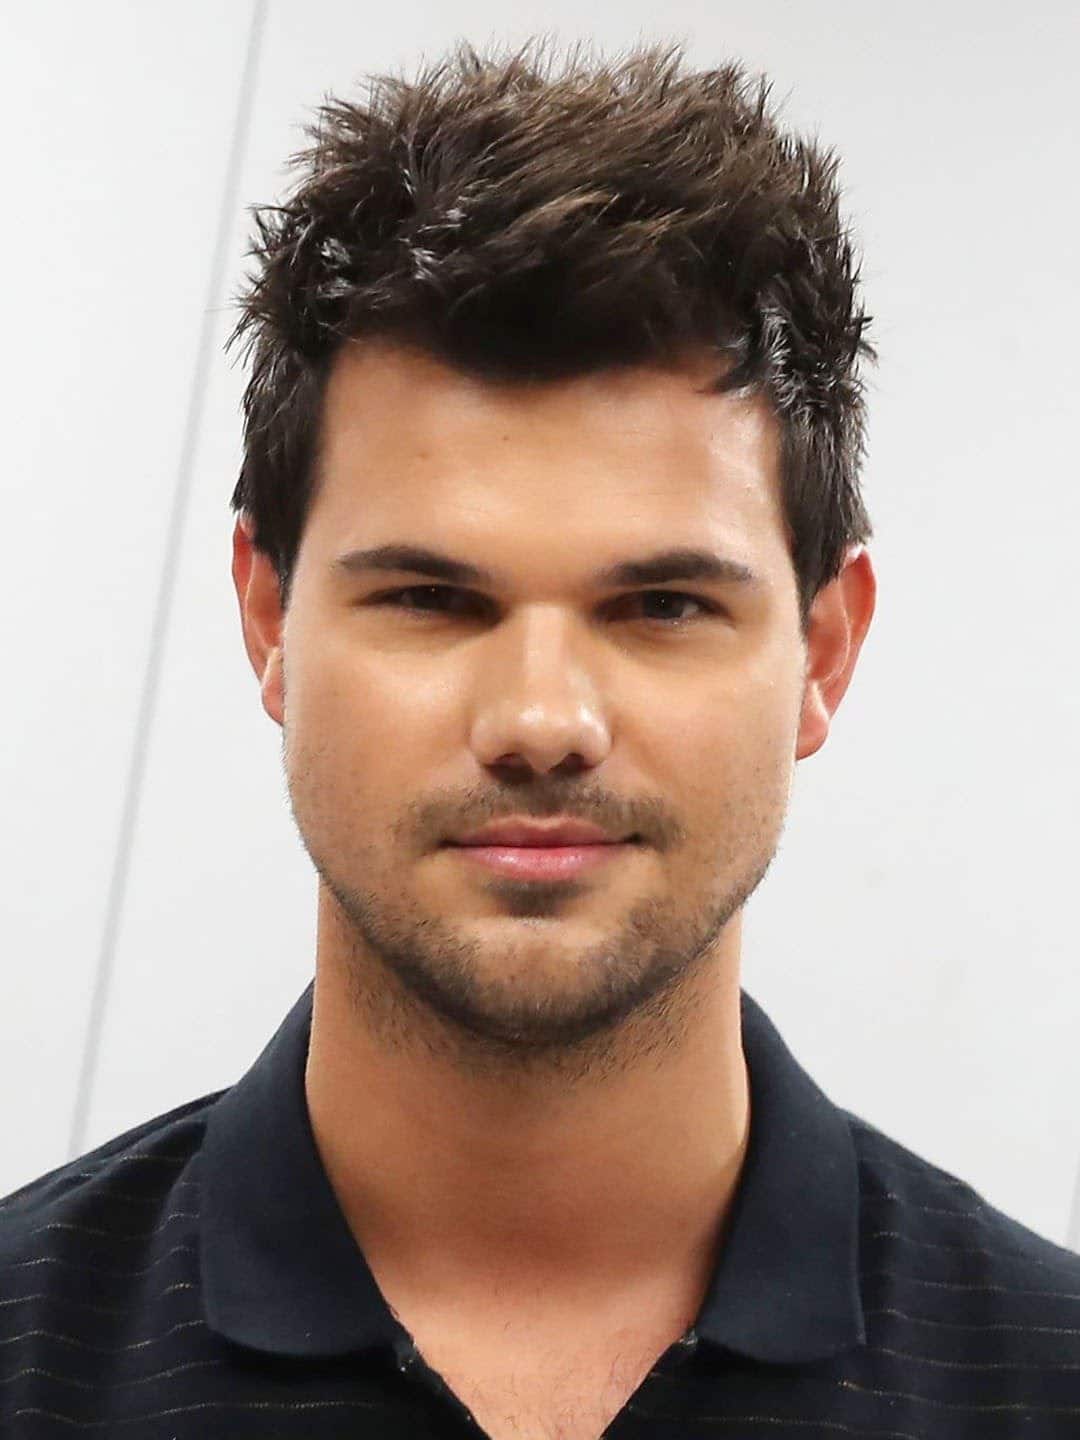 Taylor Lautner American Actor, Voice Actor, Model